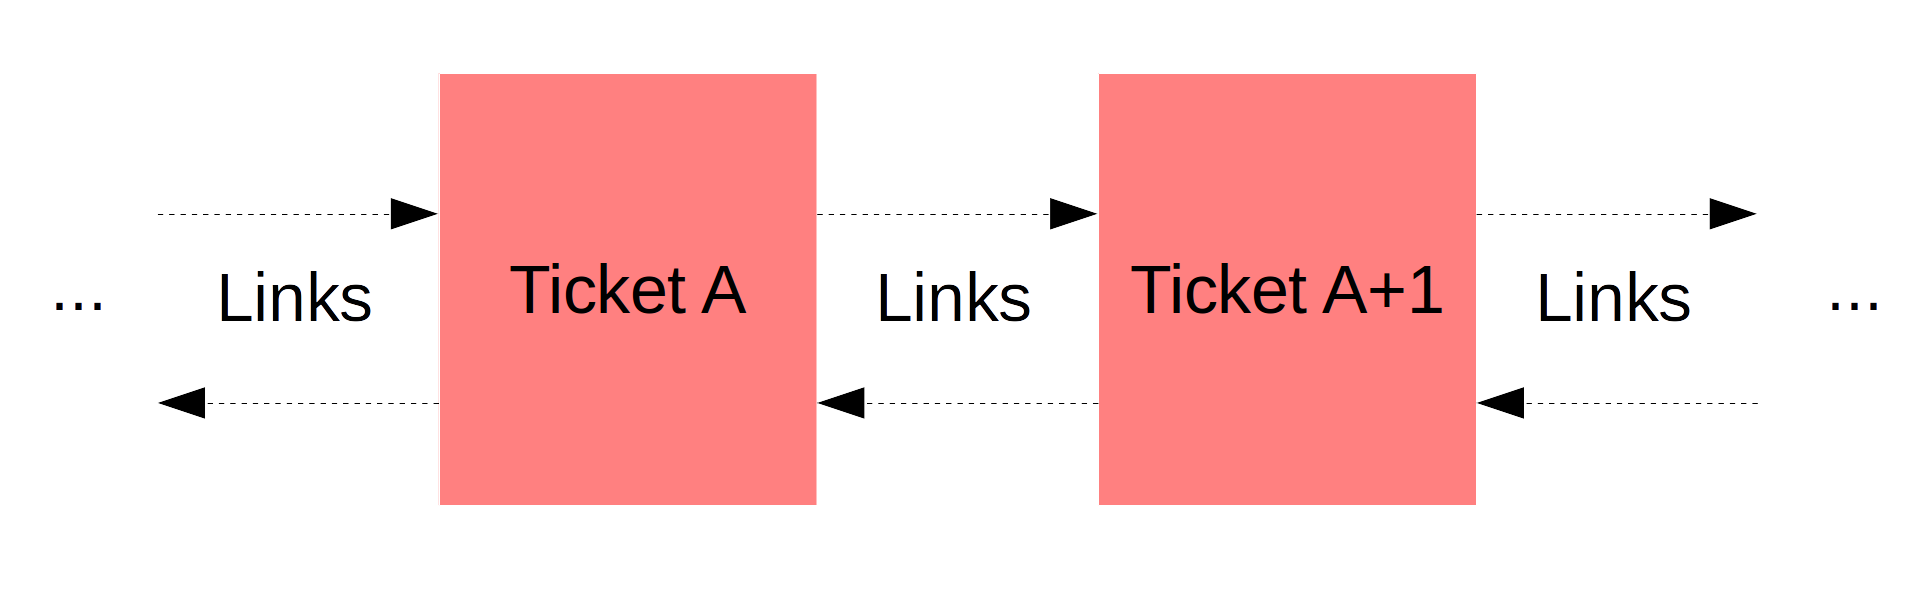 Tickets linking